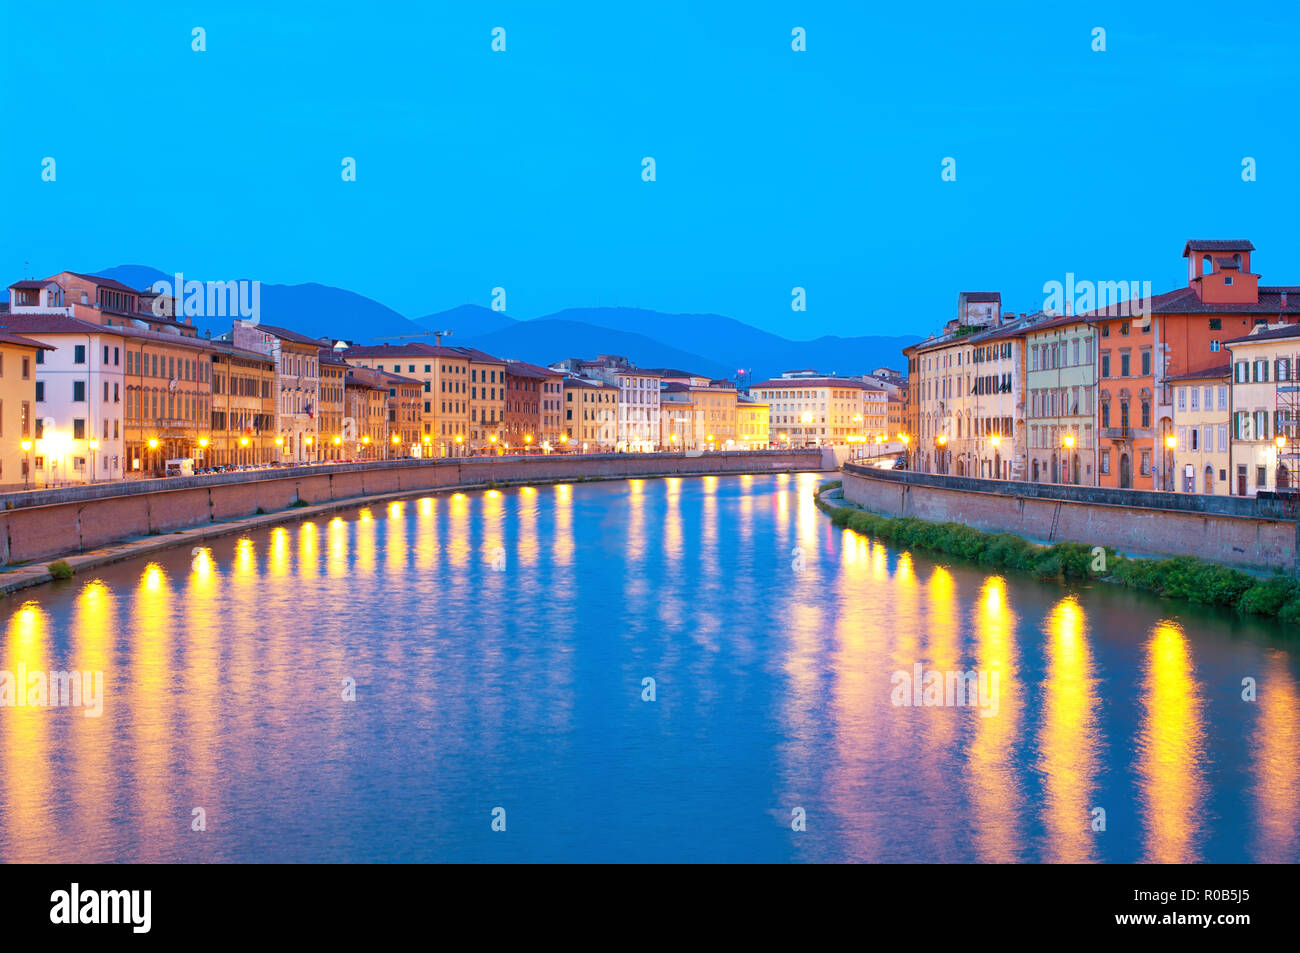 River Arno at night Pisa Italy Stock Photo